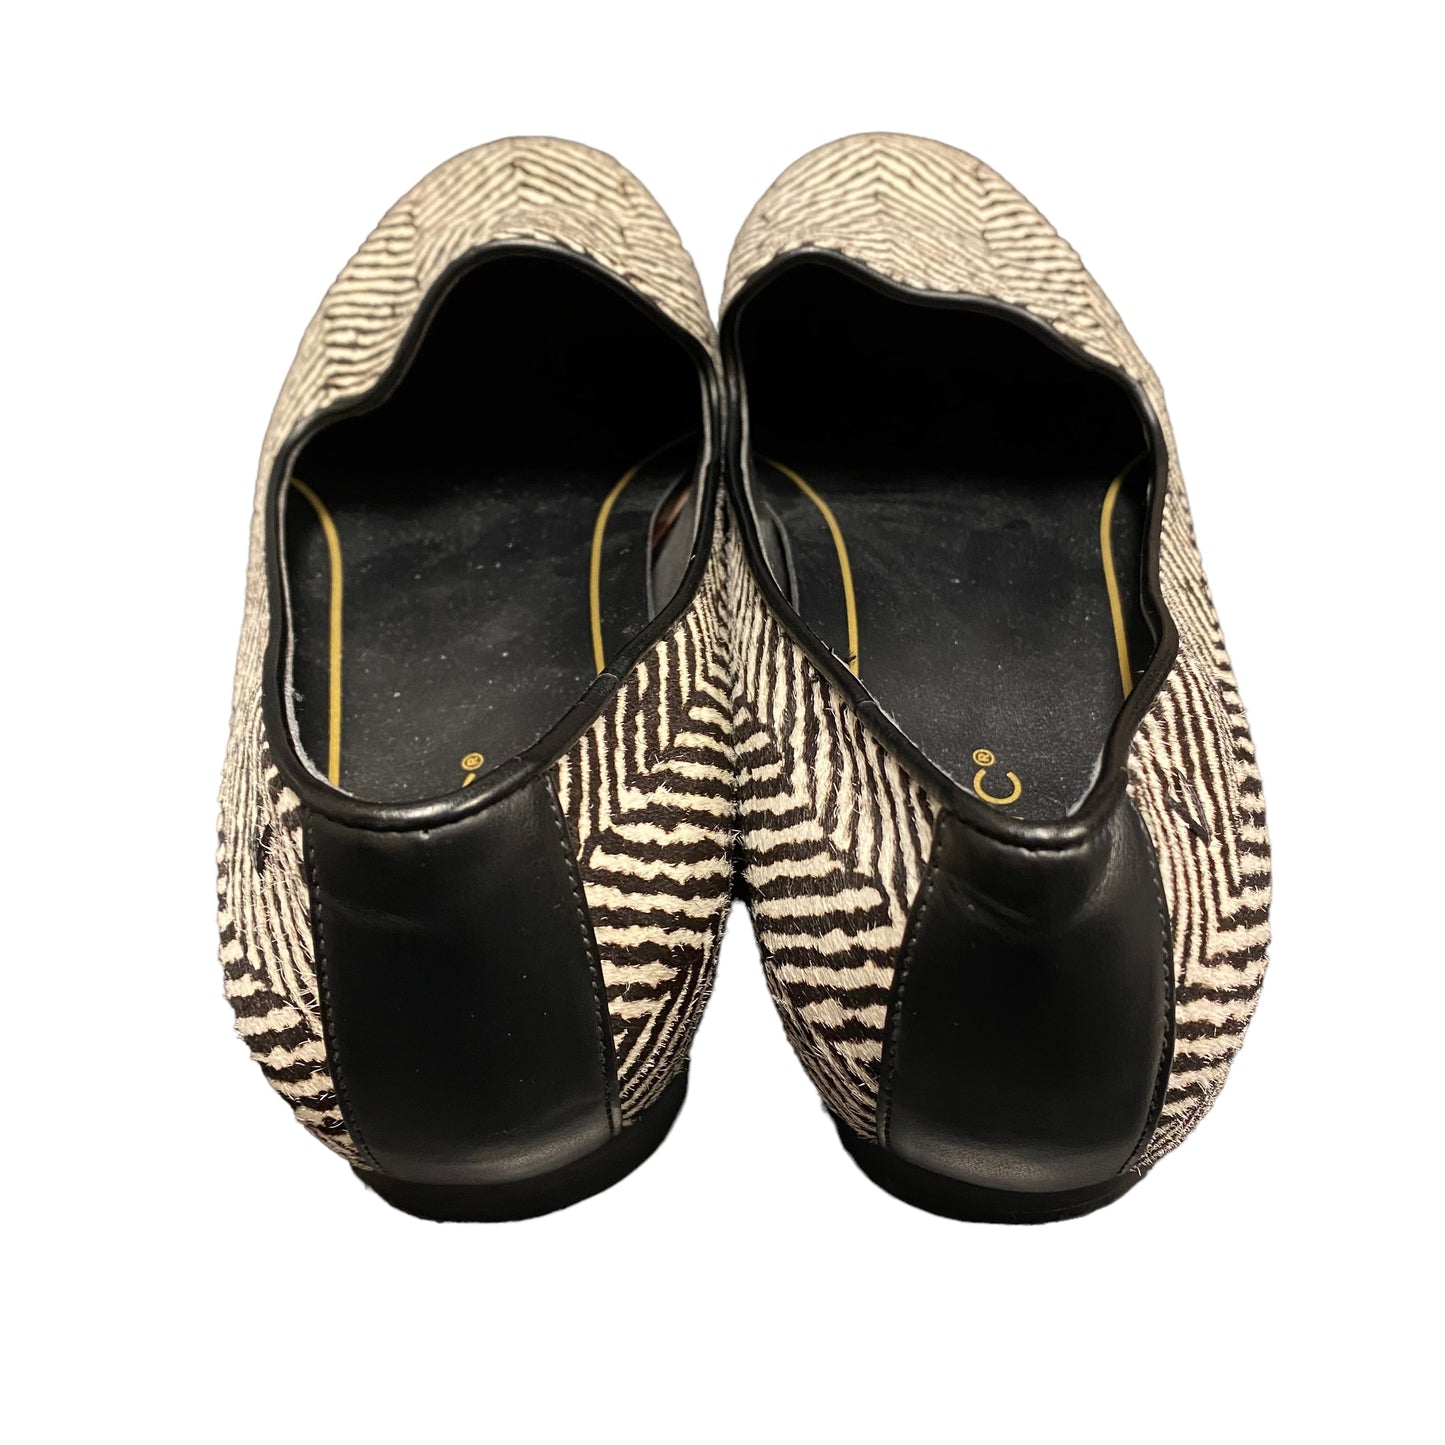 Animal Print Shoes Flats Vionic, Size 9.5